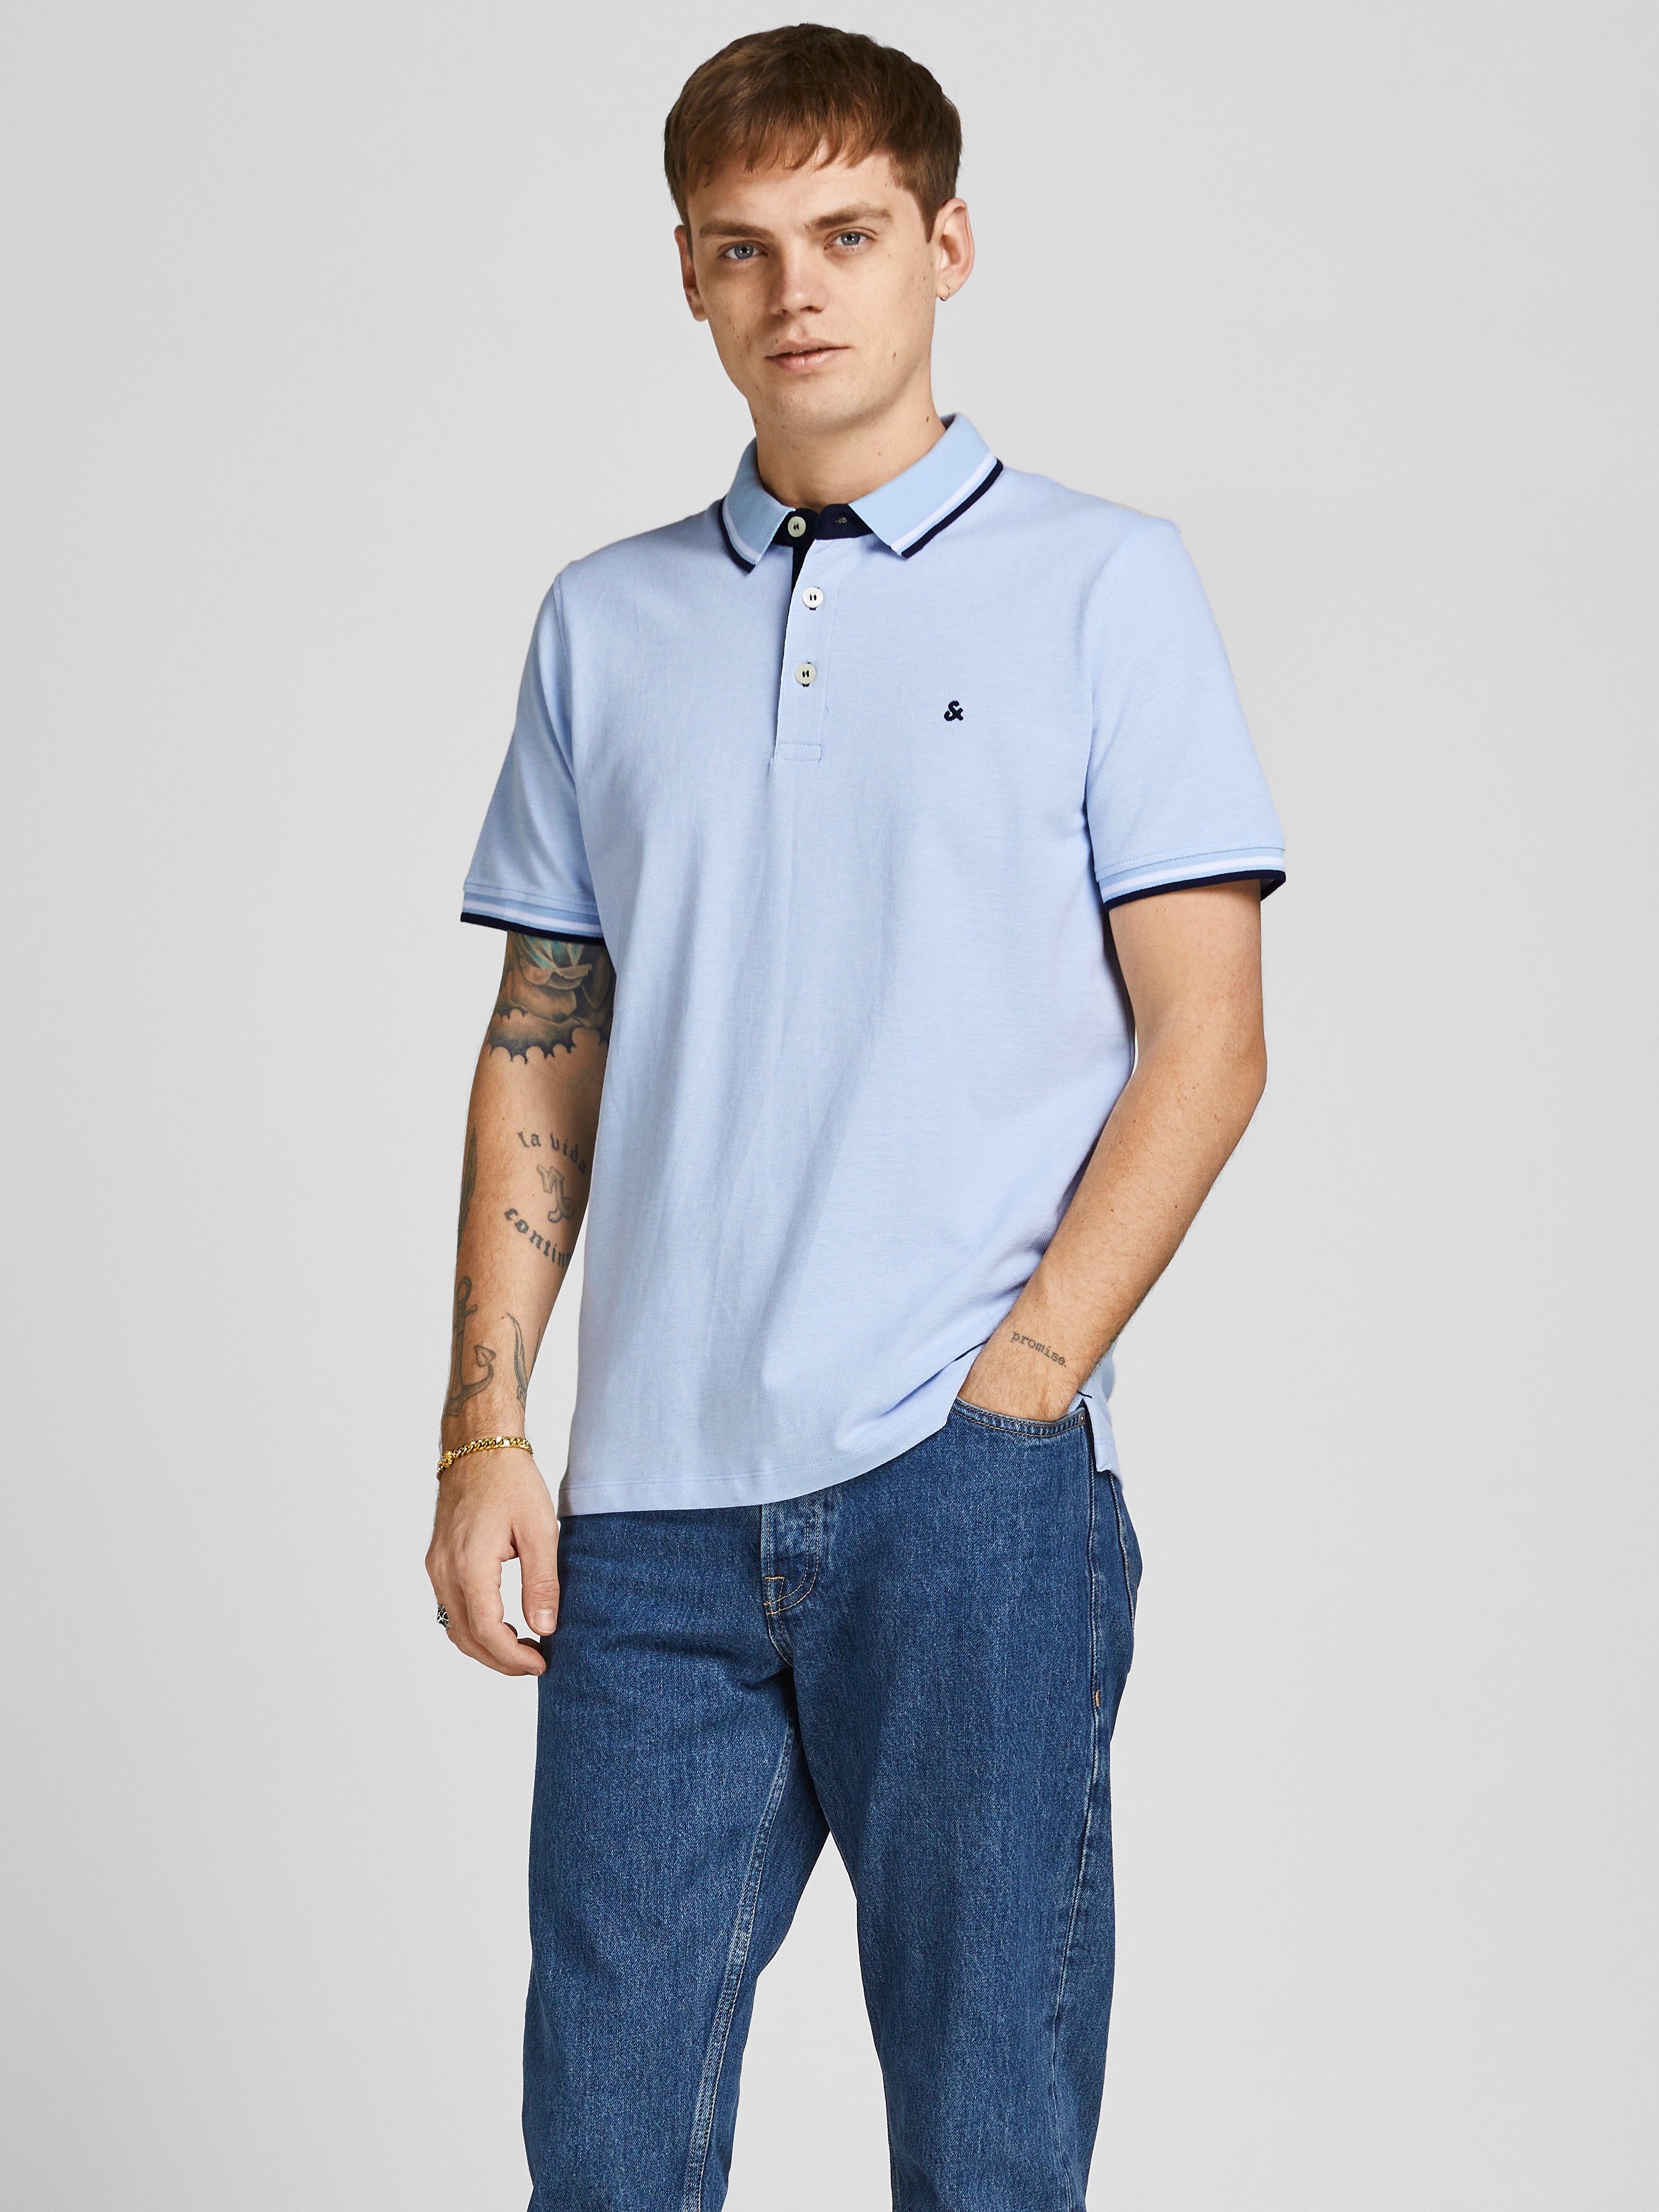 Rabatt 56 % HERREN Hemden & T-Shirts Casual Grün M Jack & Jones Poloshirt 